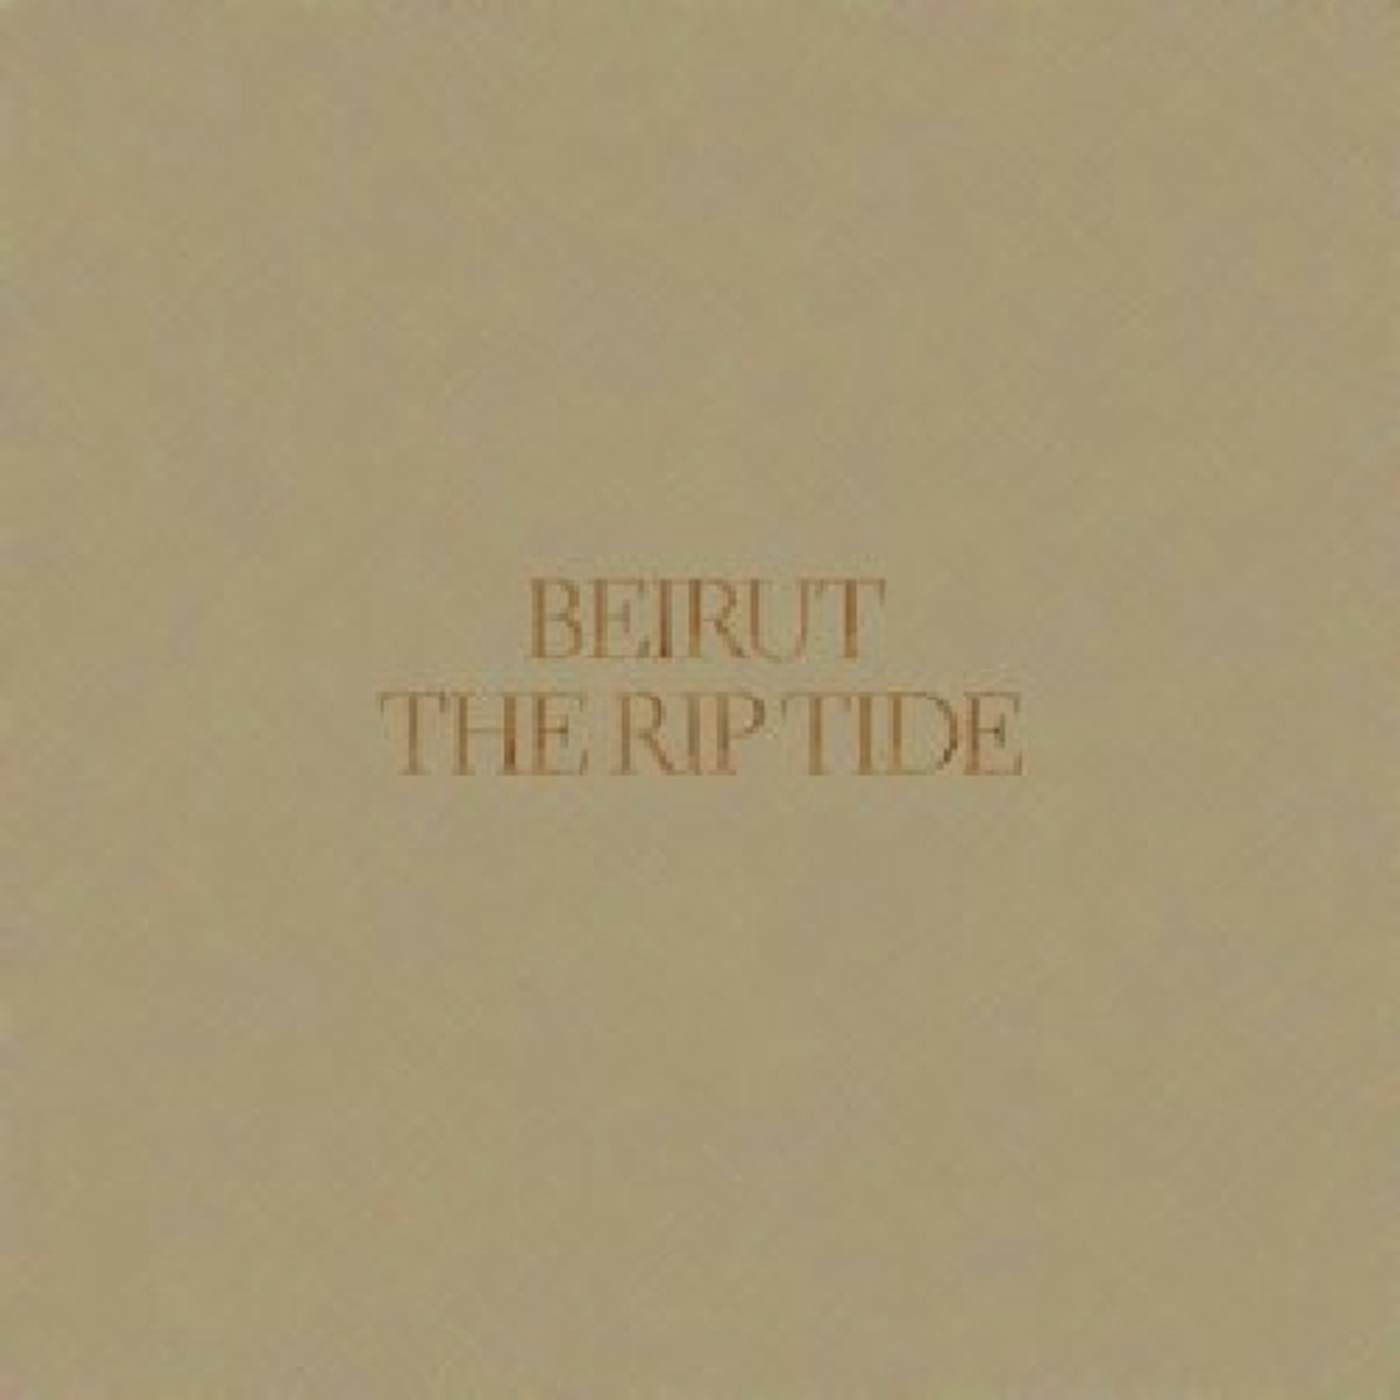 Beirut RIP TIDE Vinyl Record